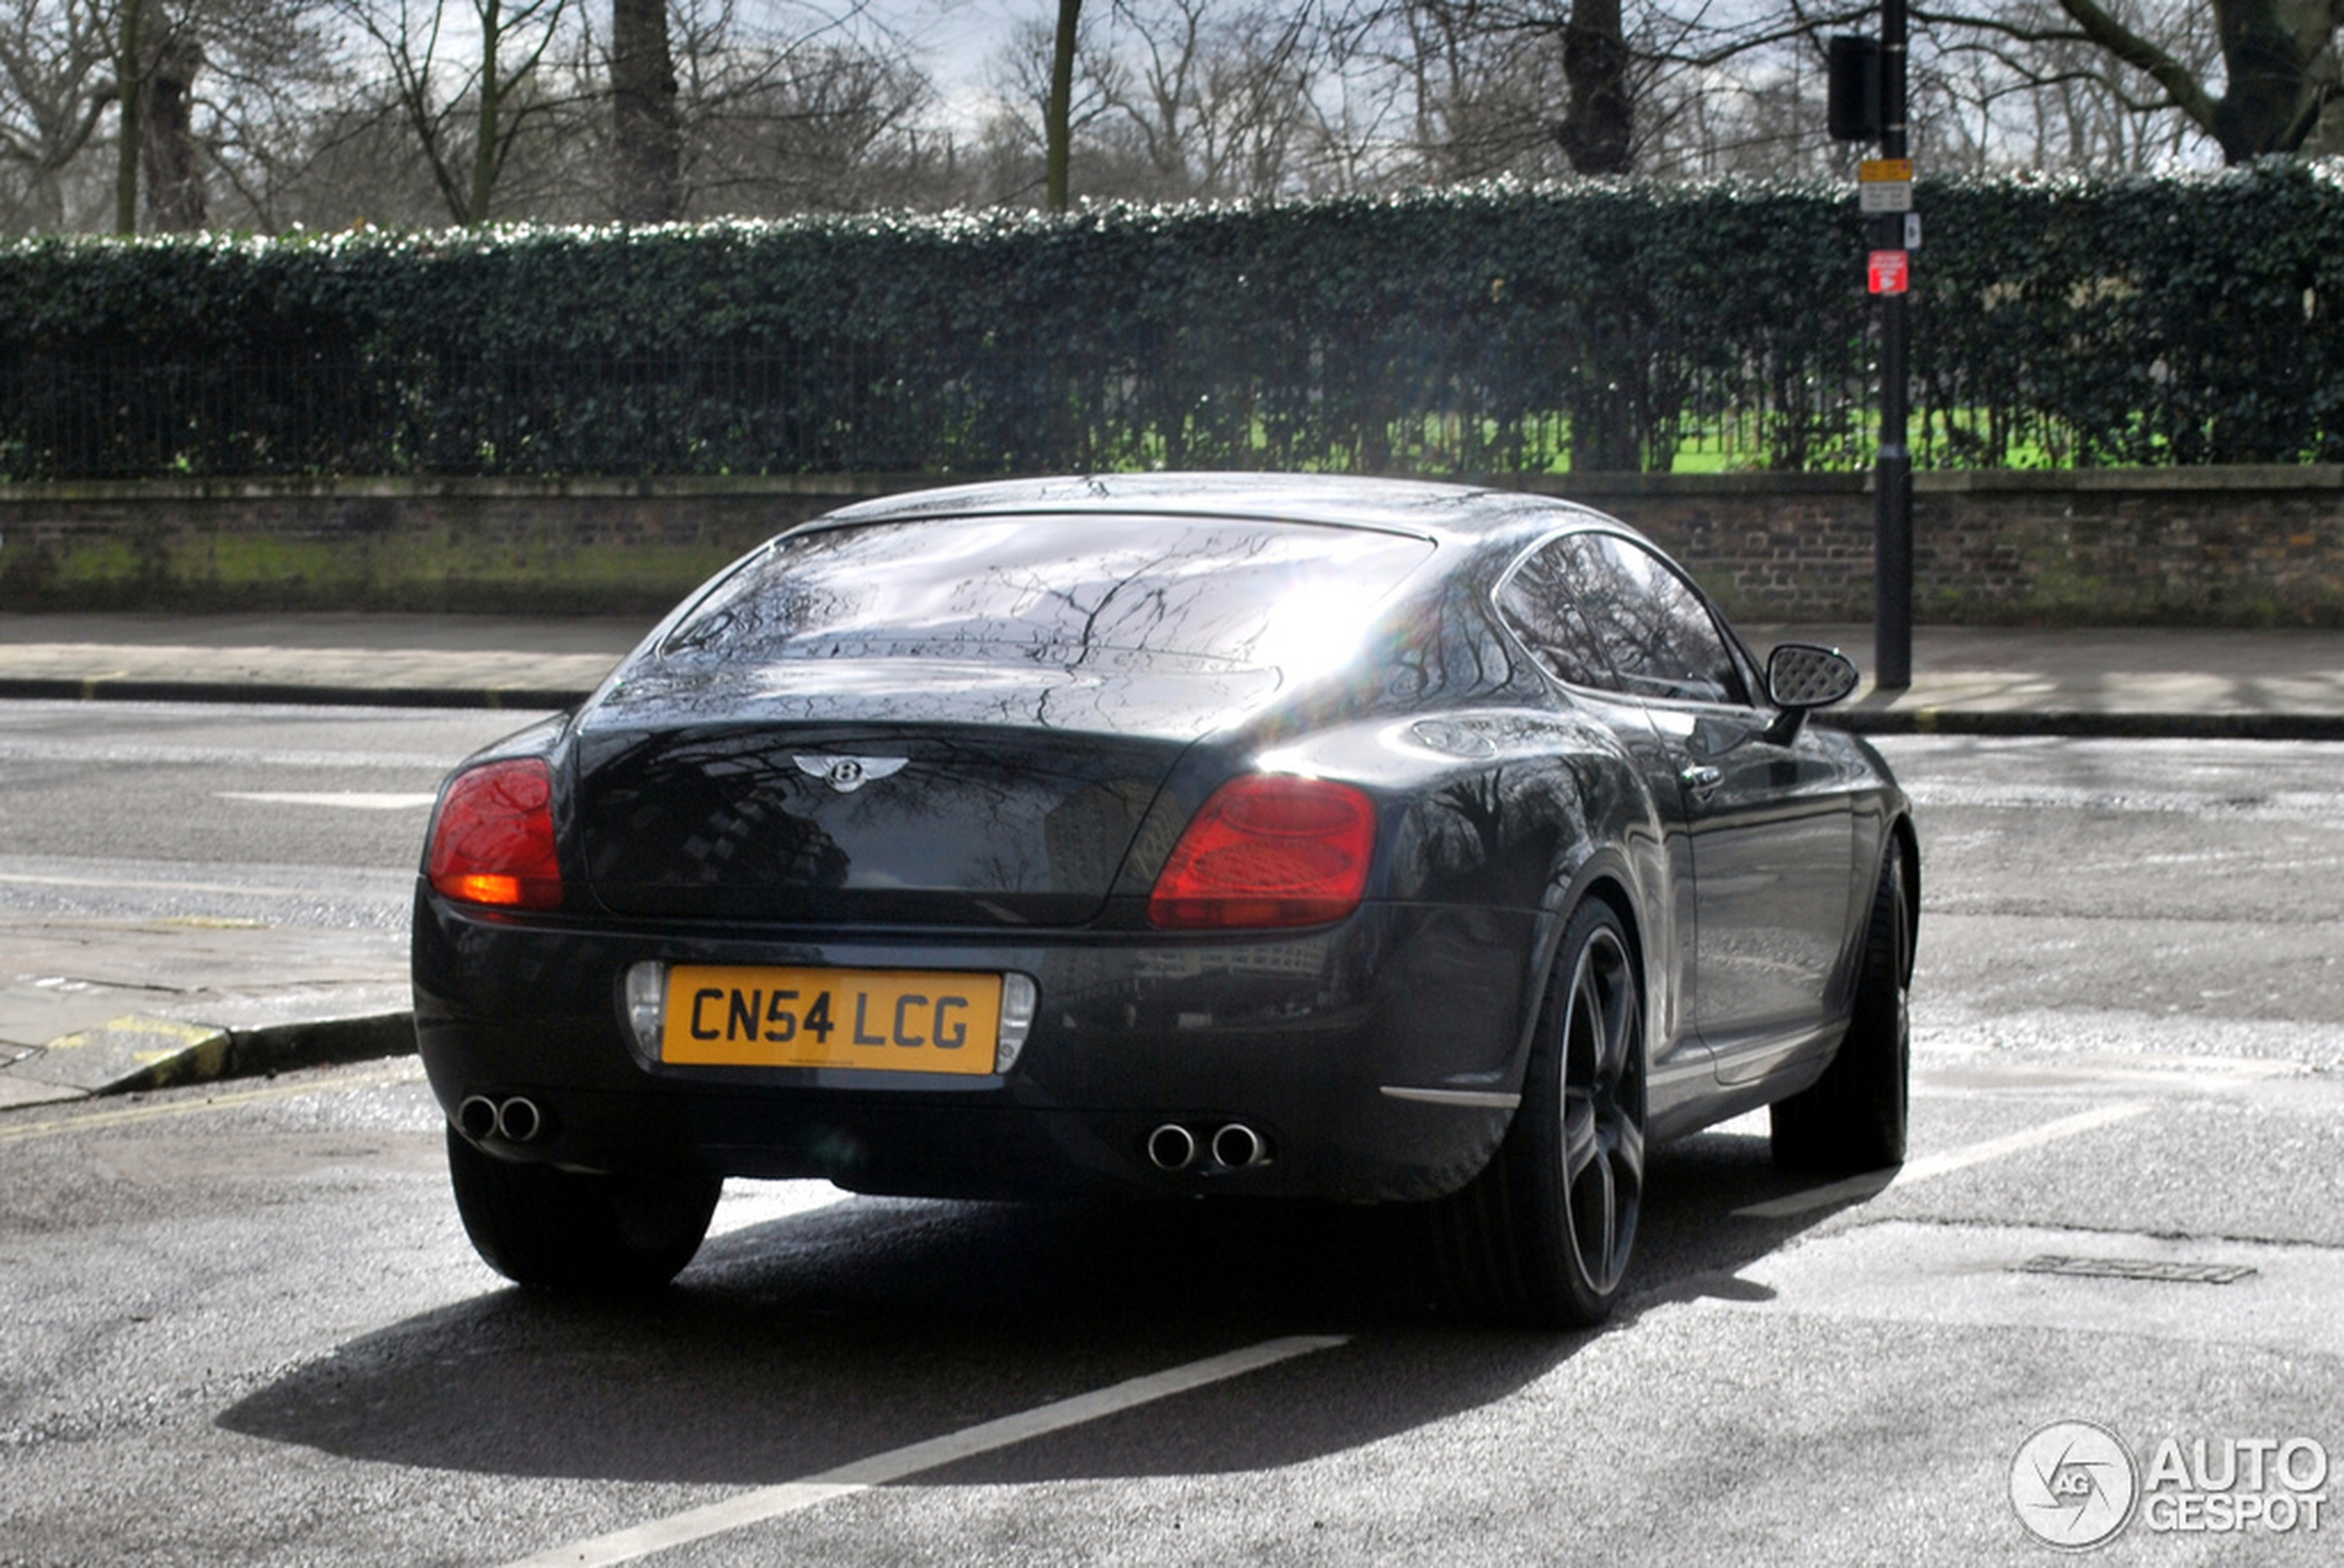 Bentley Continental GT MTM